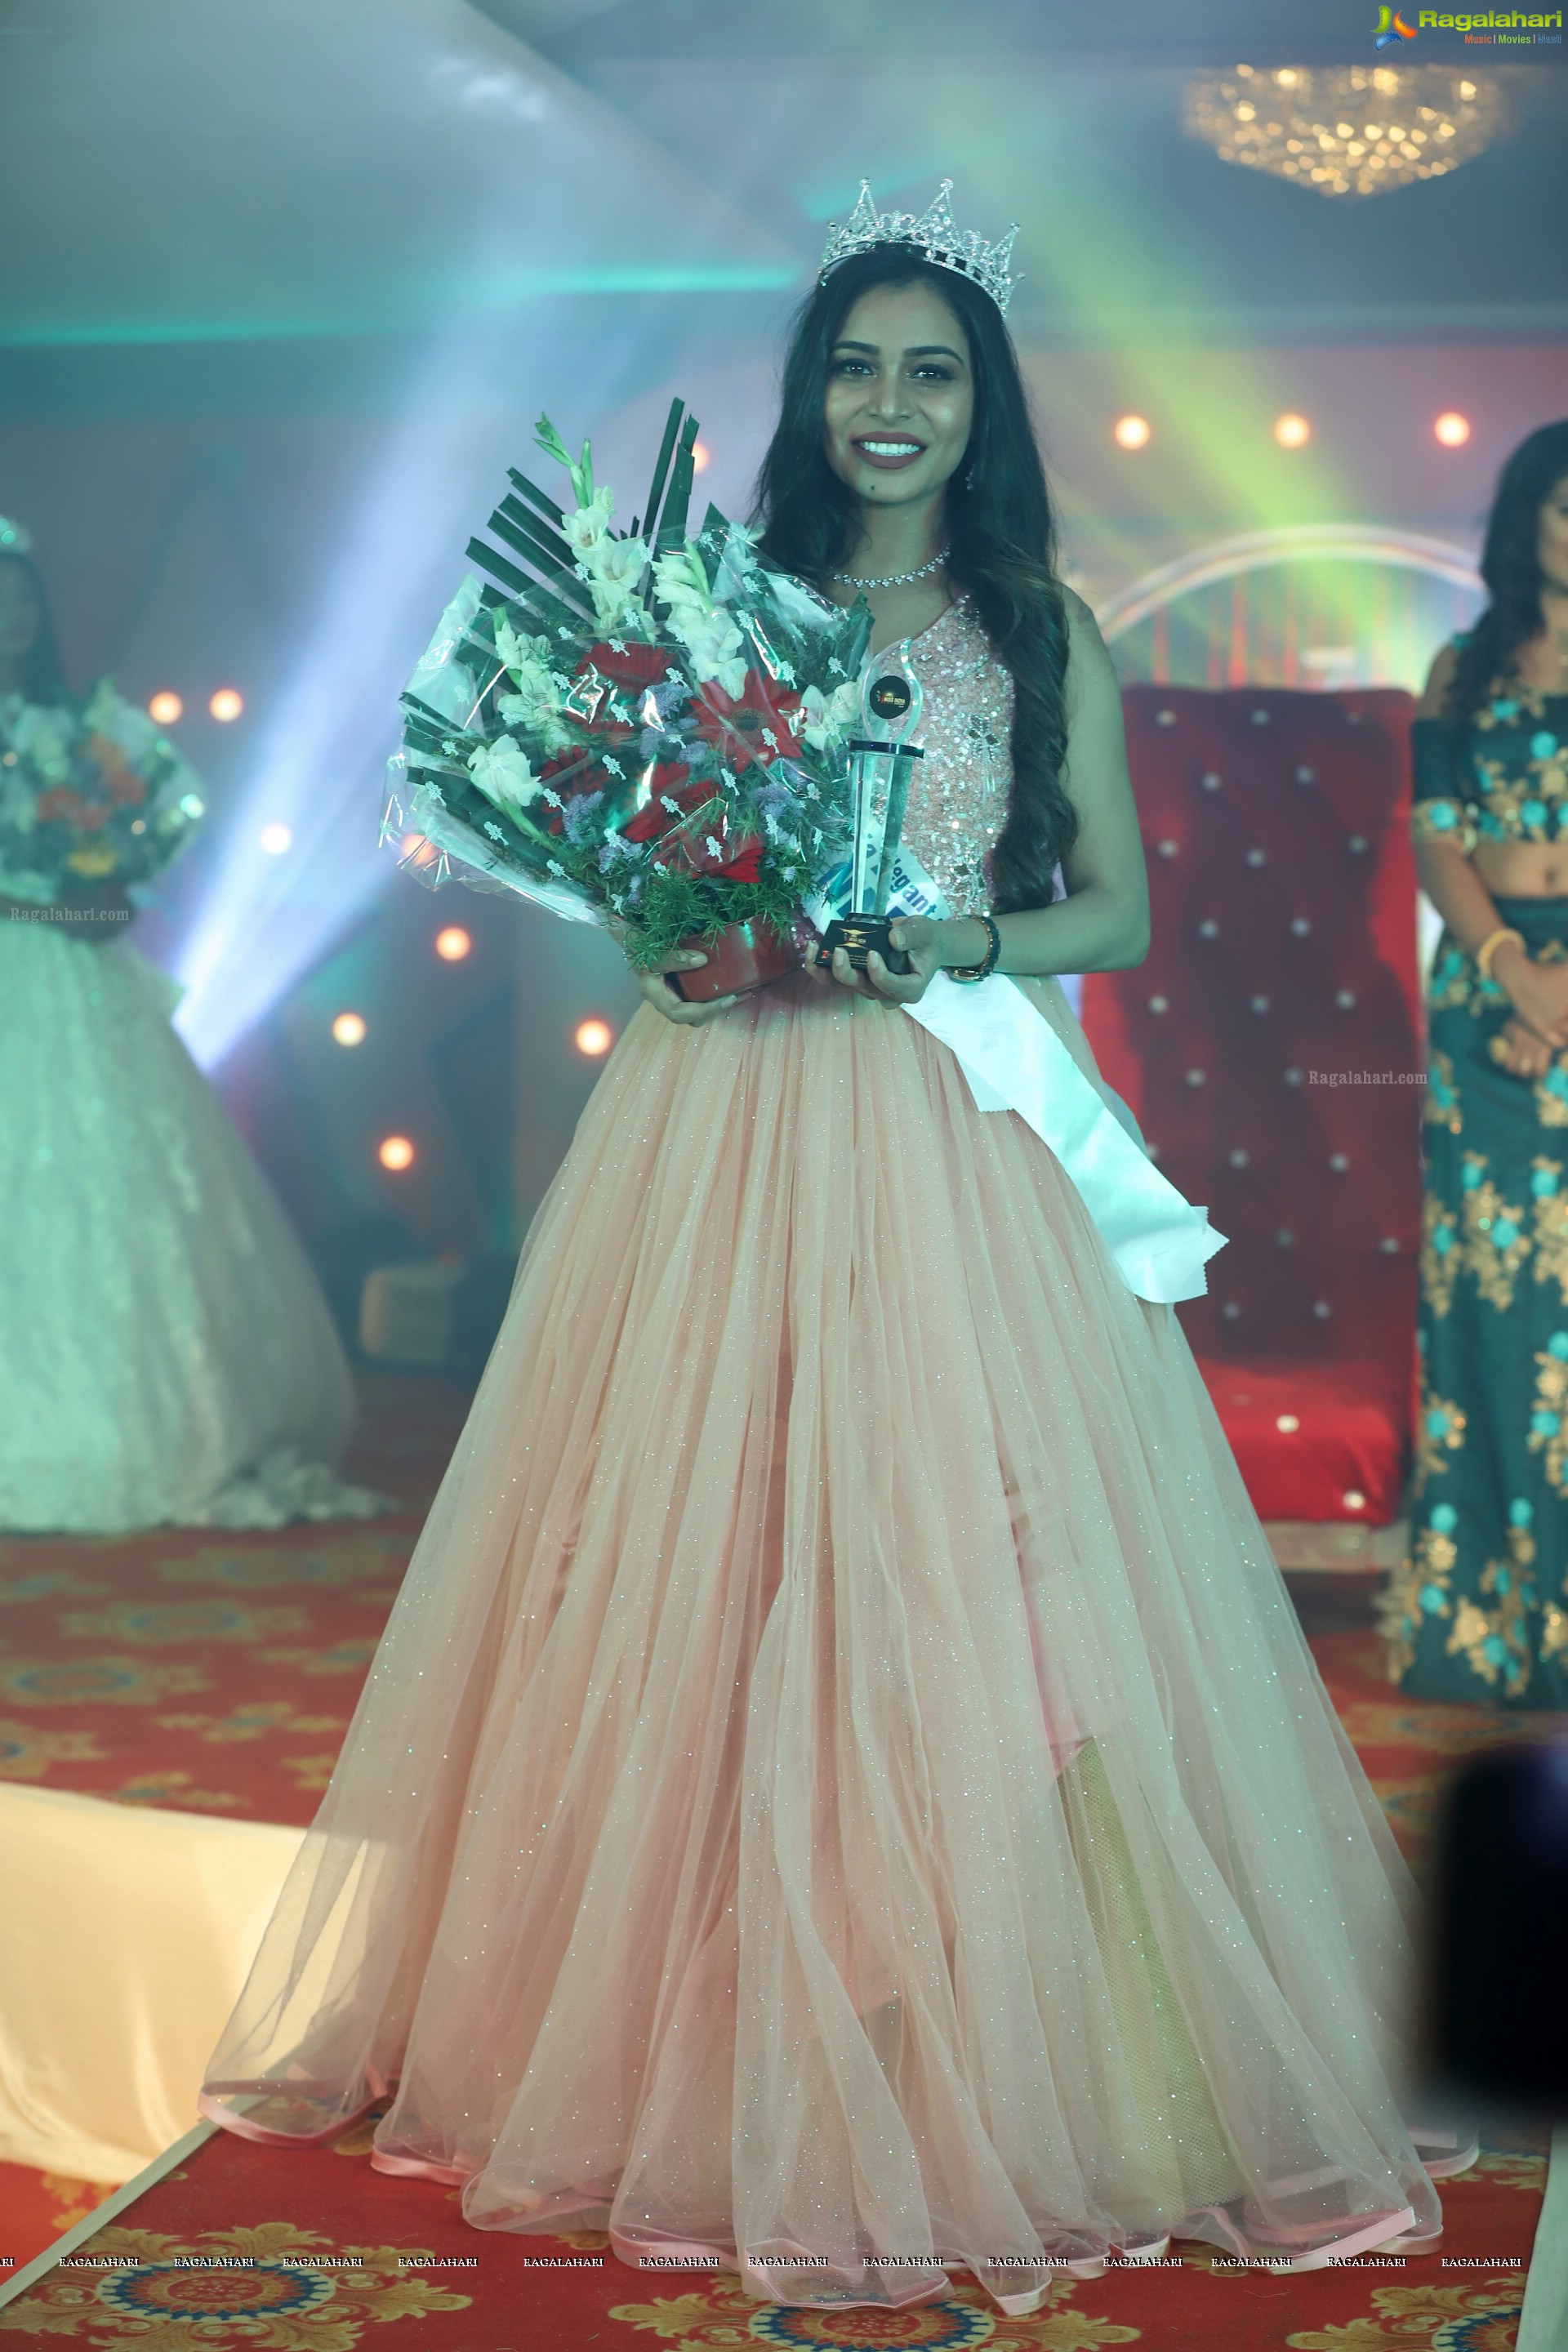 Sanjana Anne Won Miss India Elegant 2019 in Bangalore